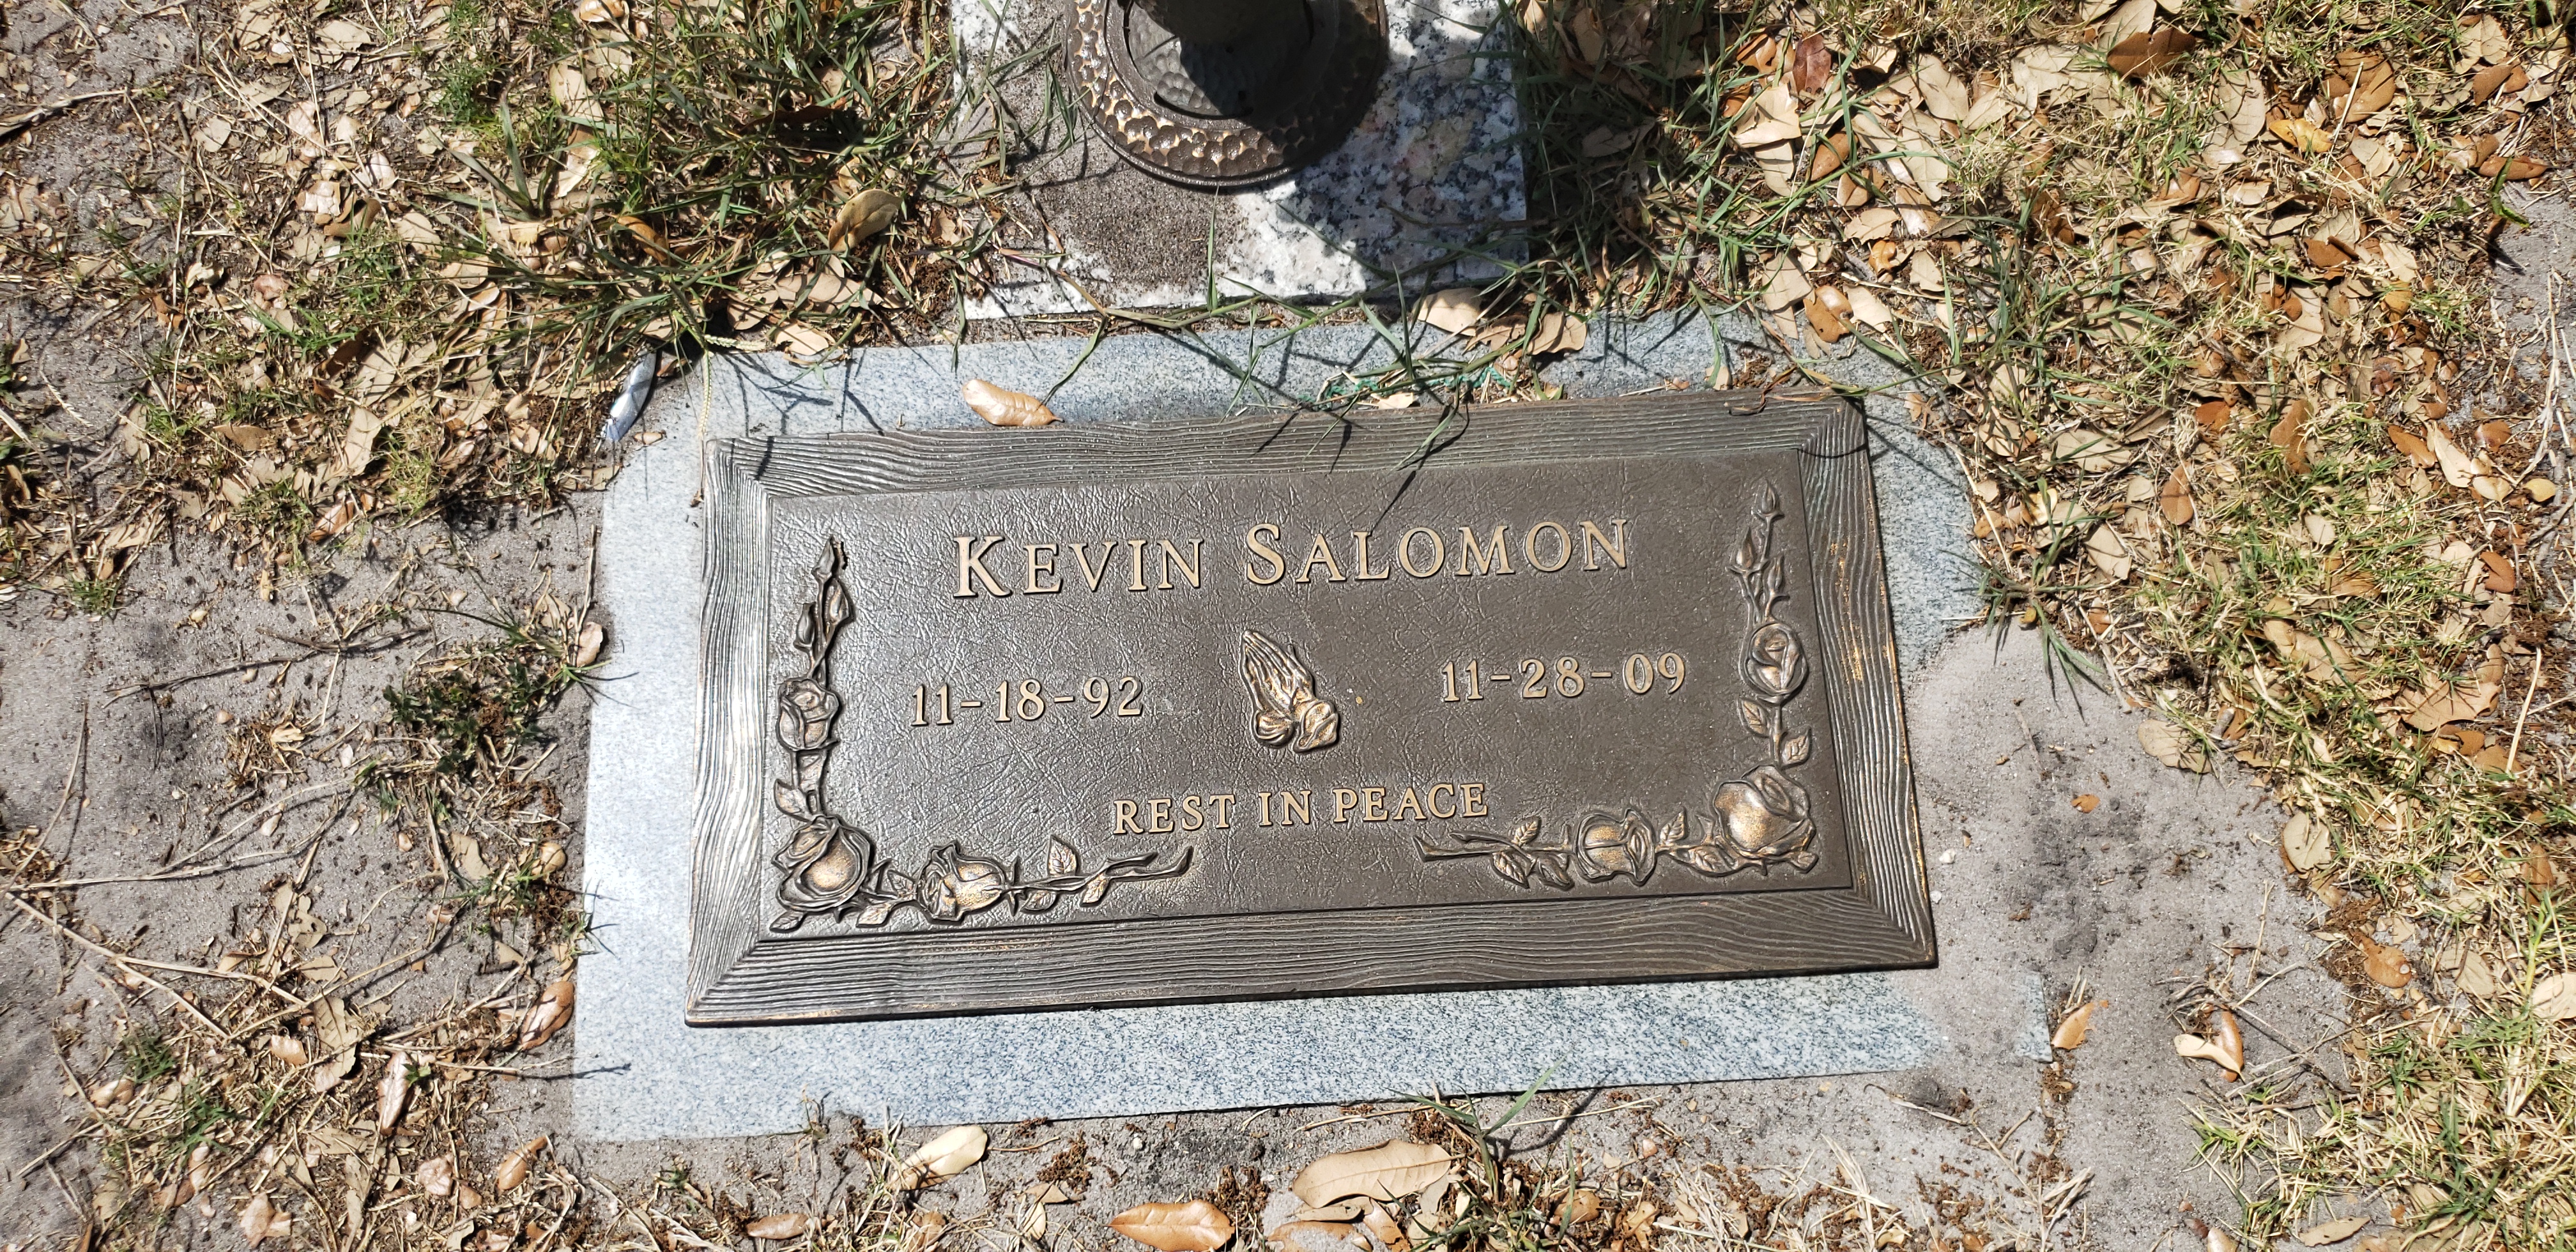 Kevin Salomon